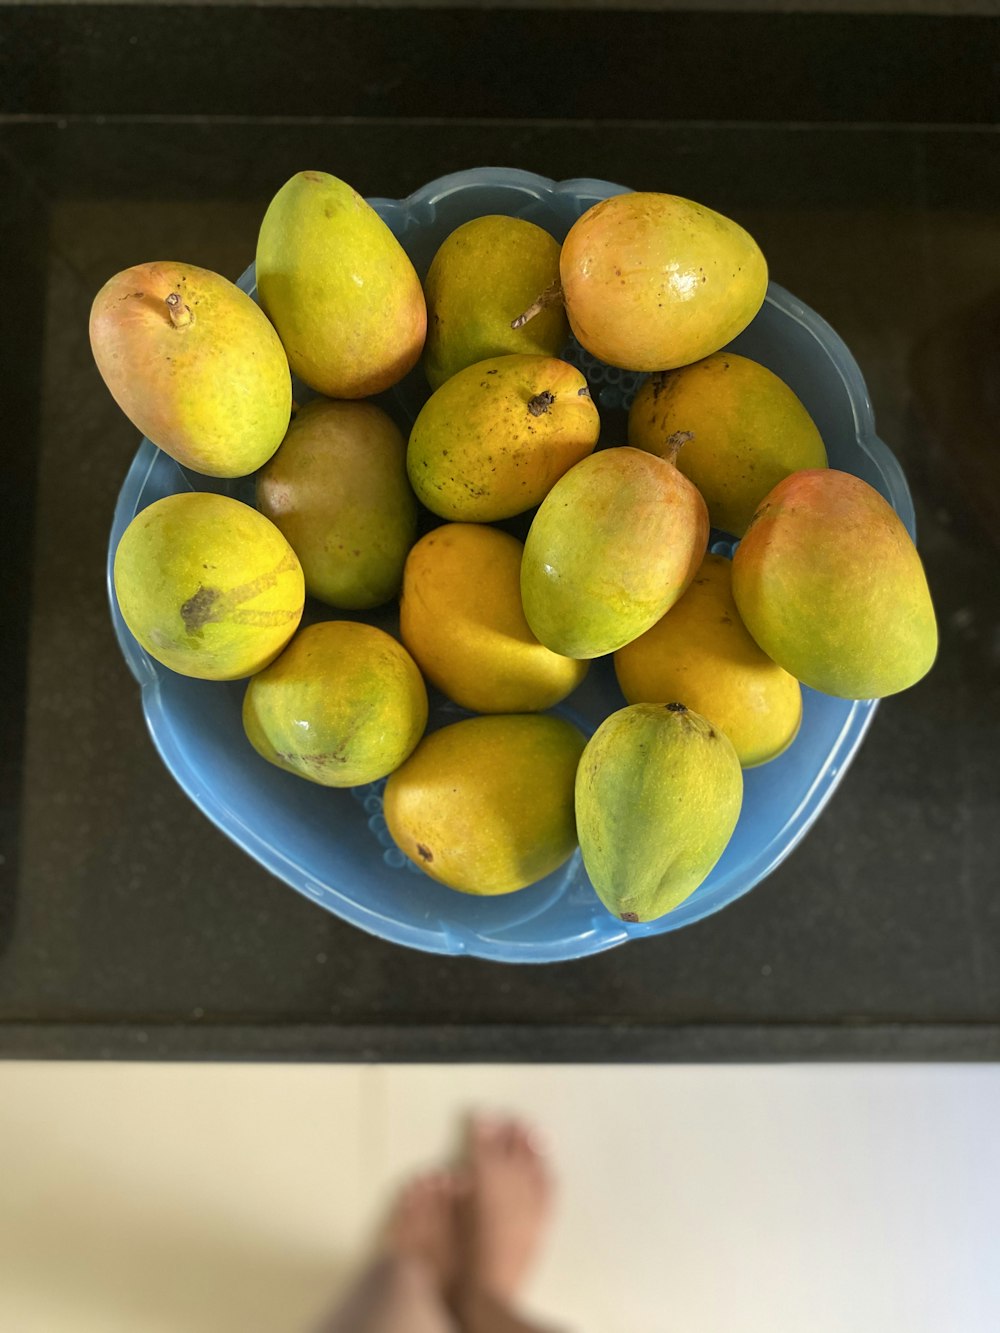 yellow citrus fruits on blue ceramic bowl